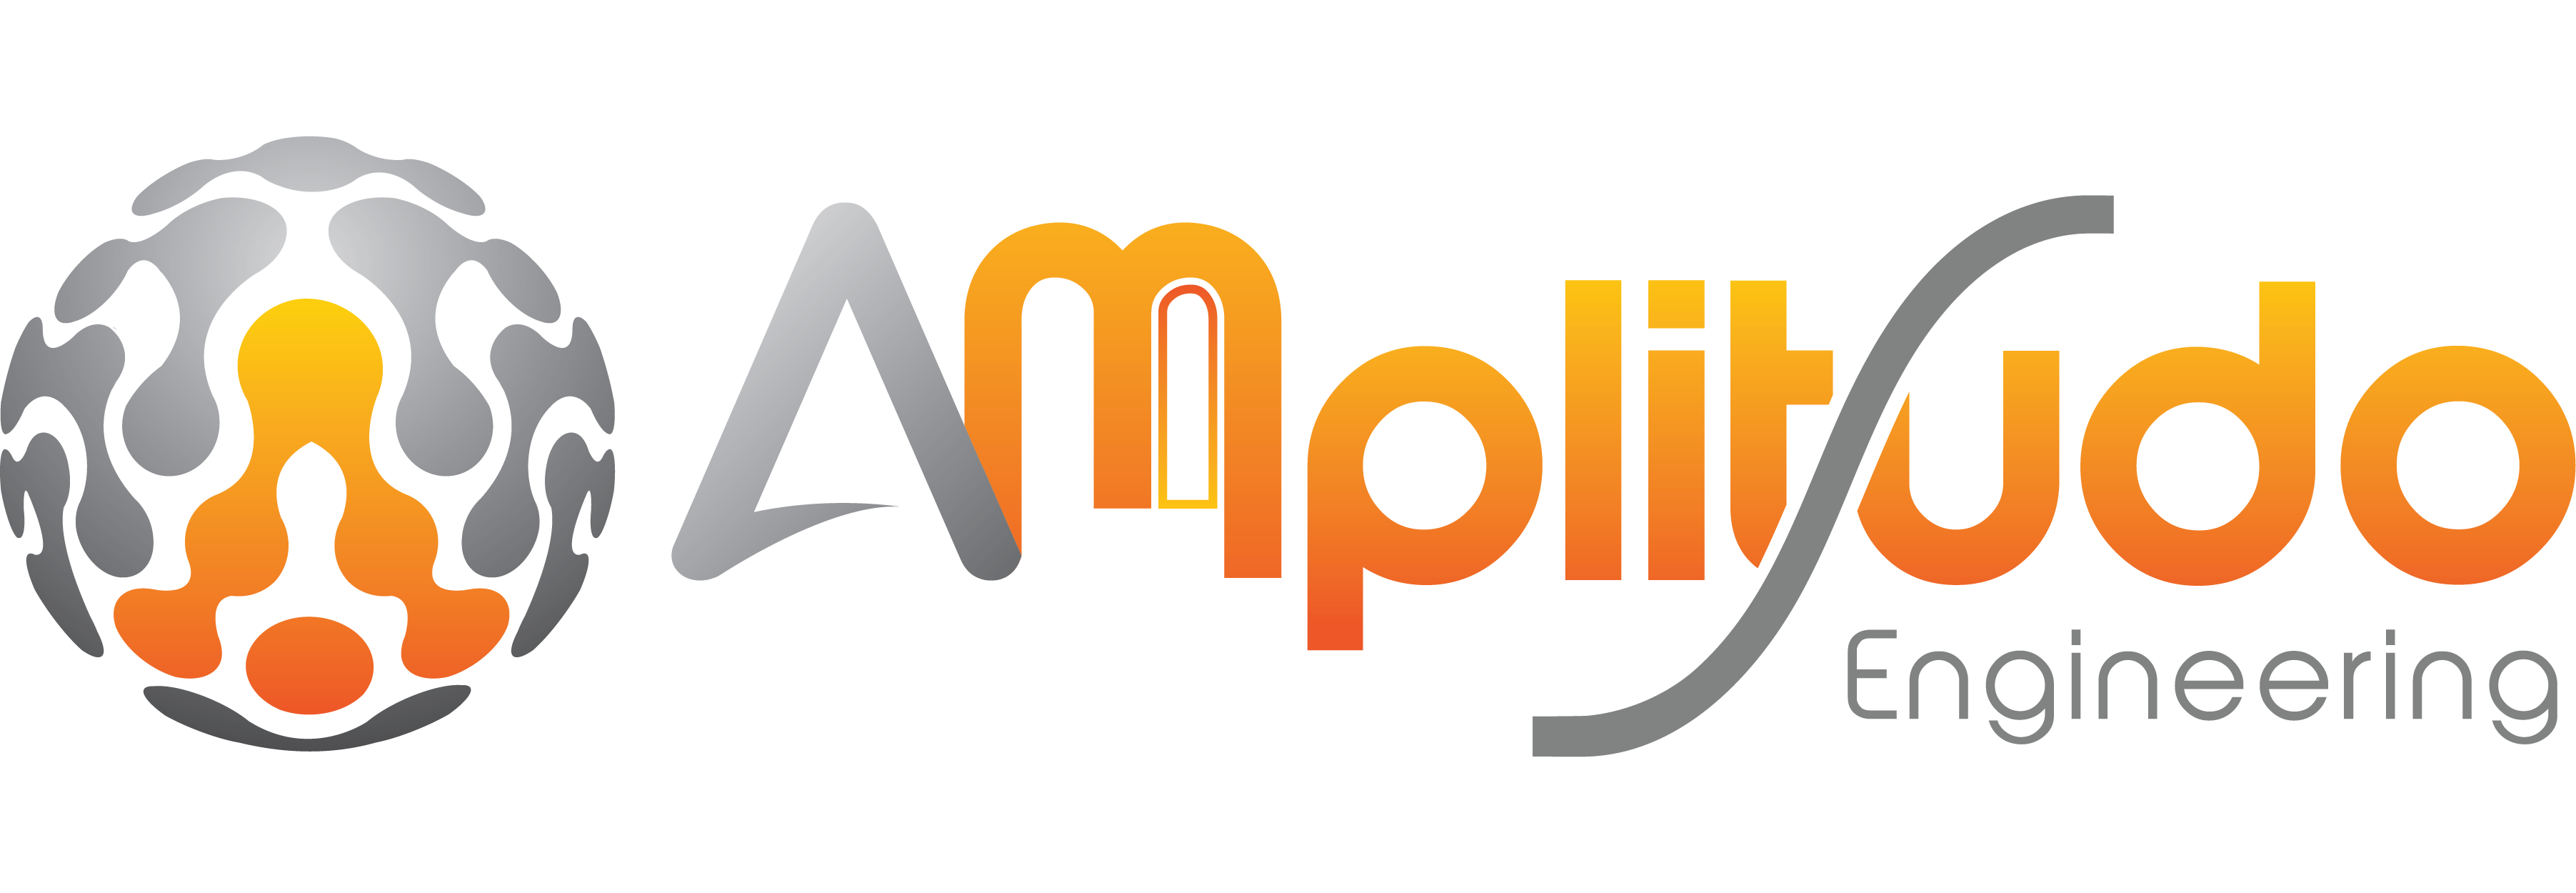 Amplitudo Engineering